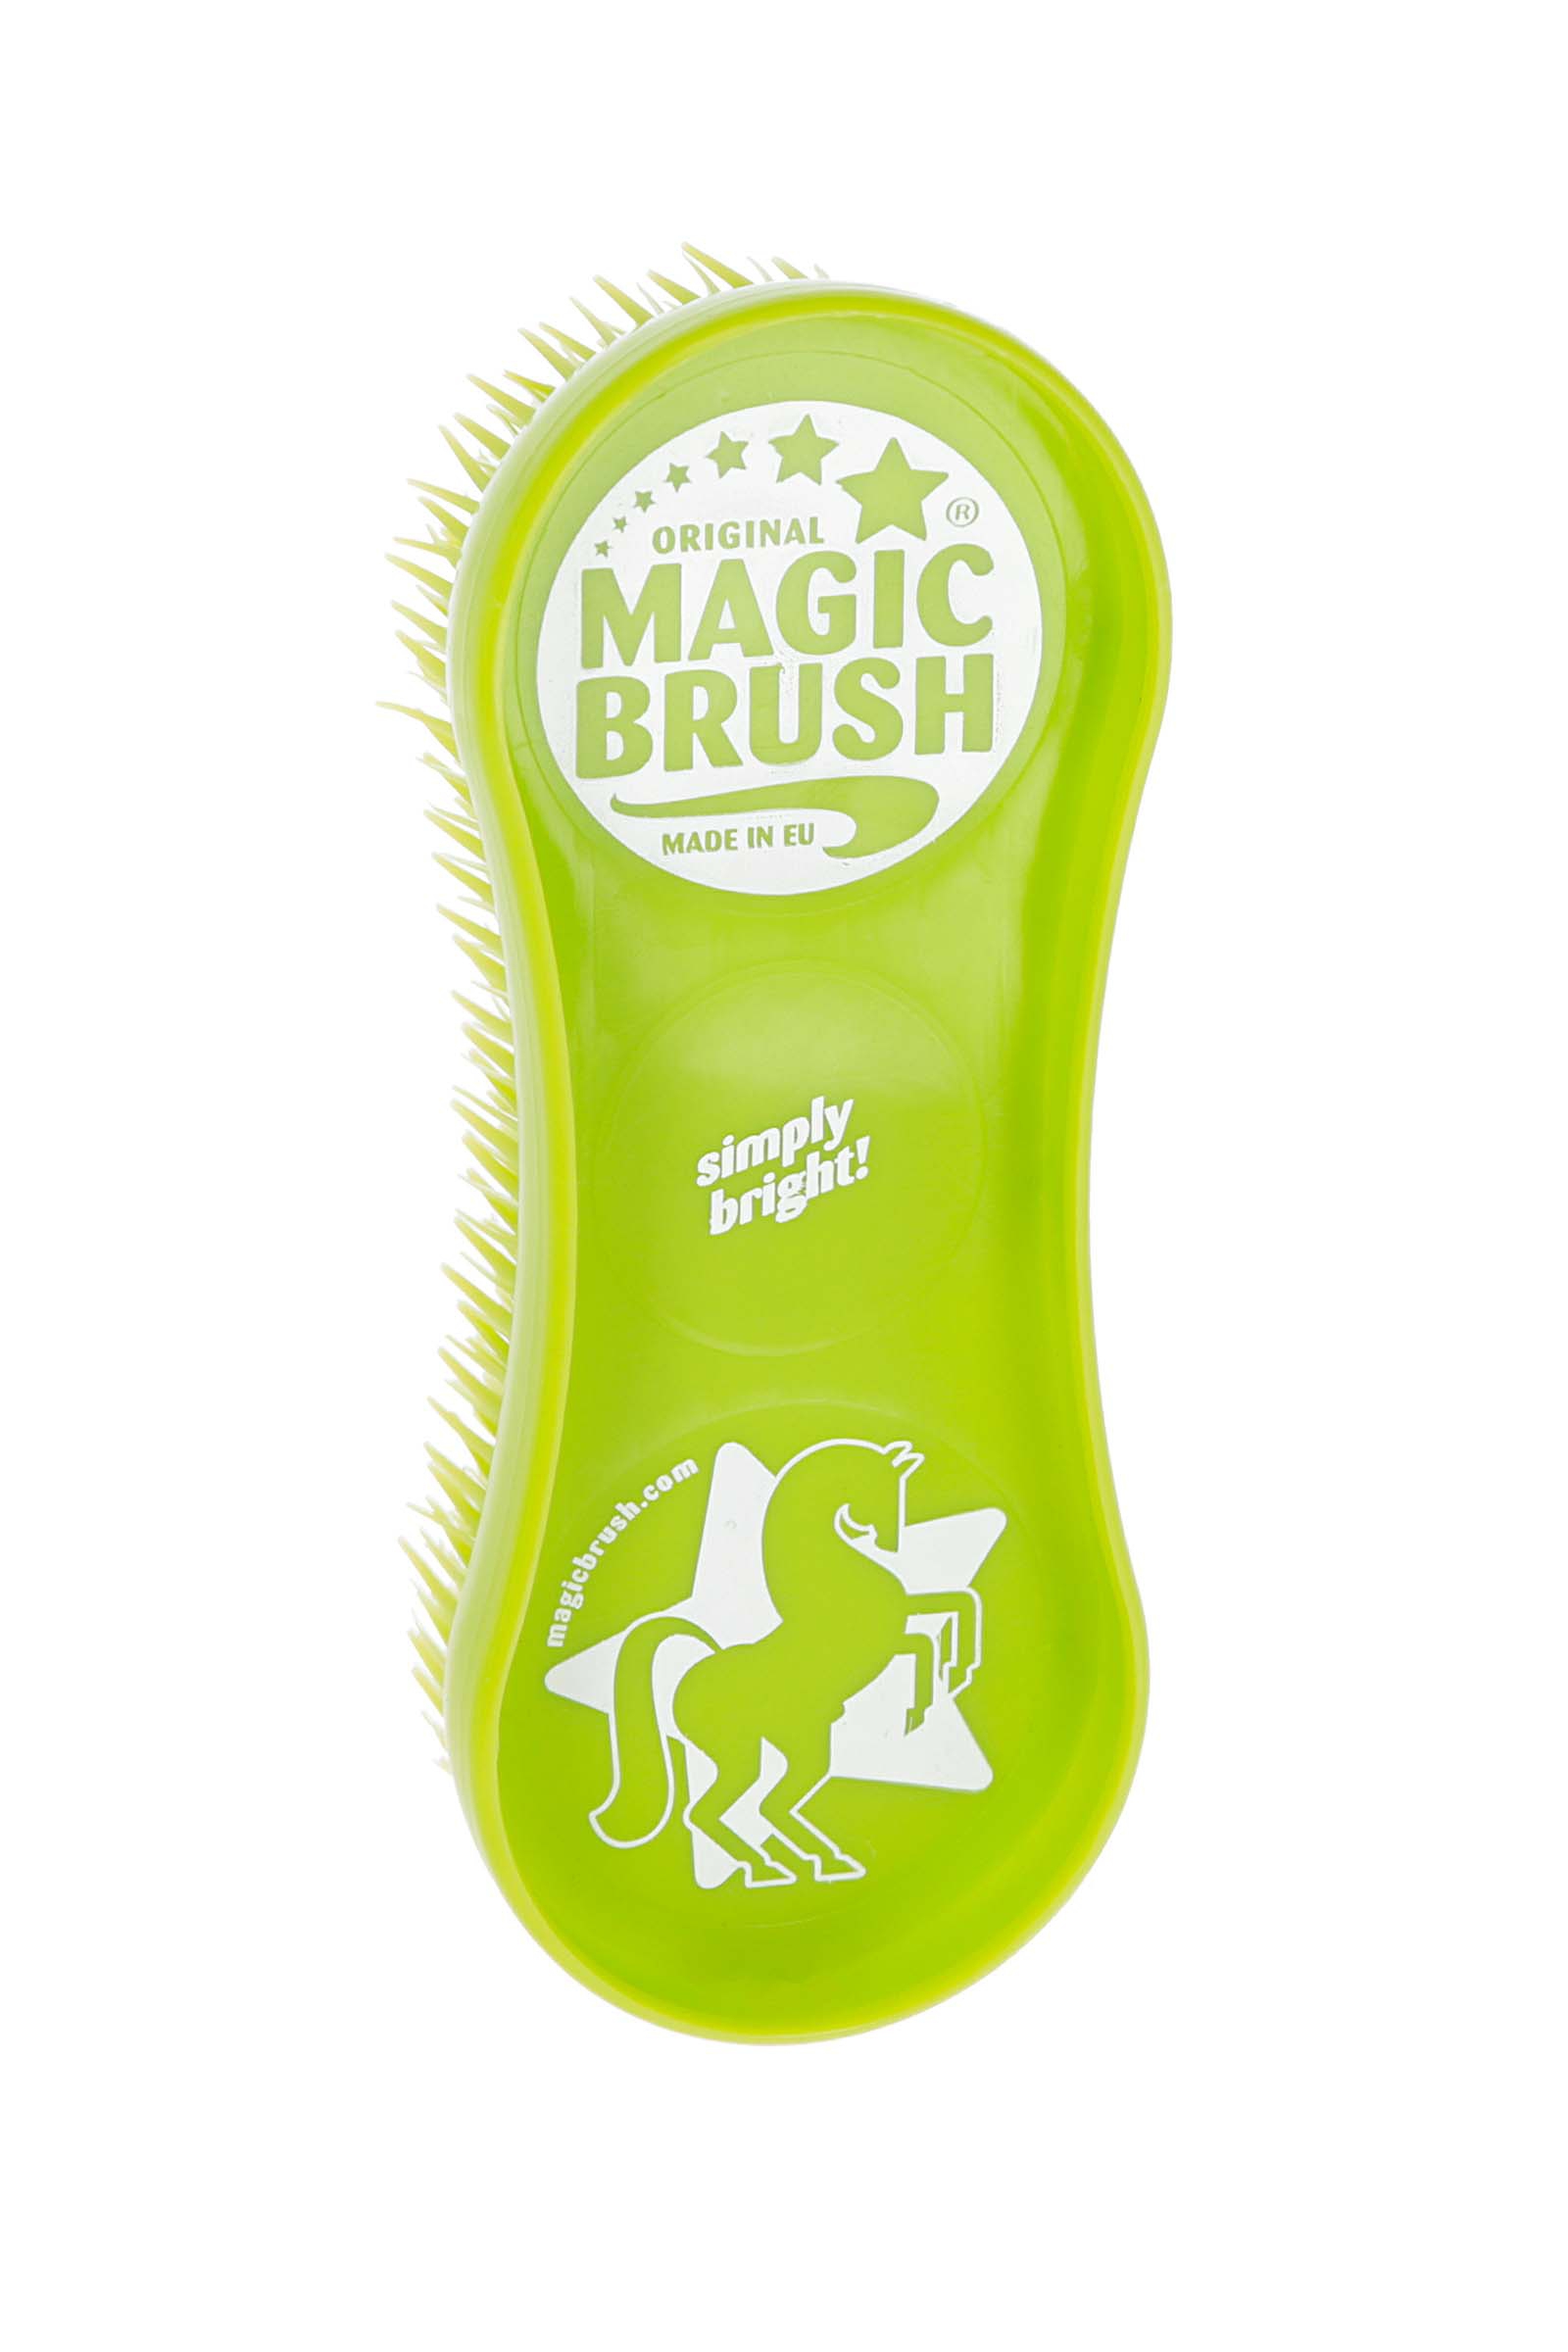 Magic Brush - Brands - DocHorse